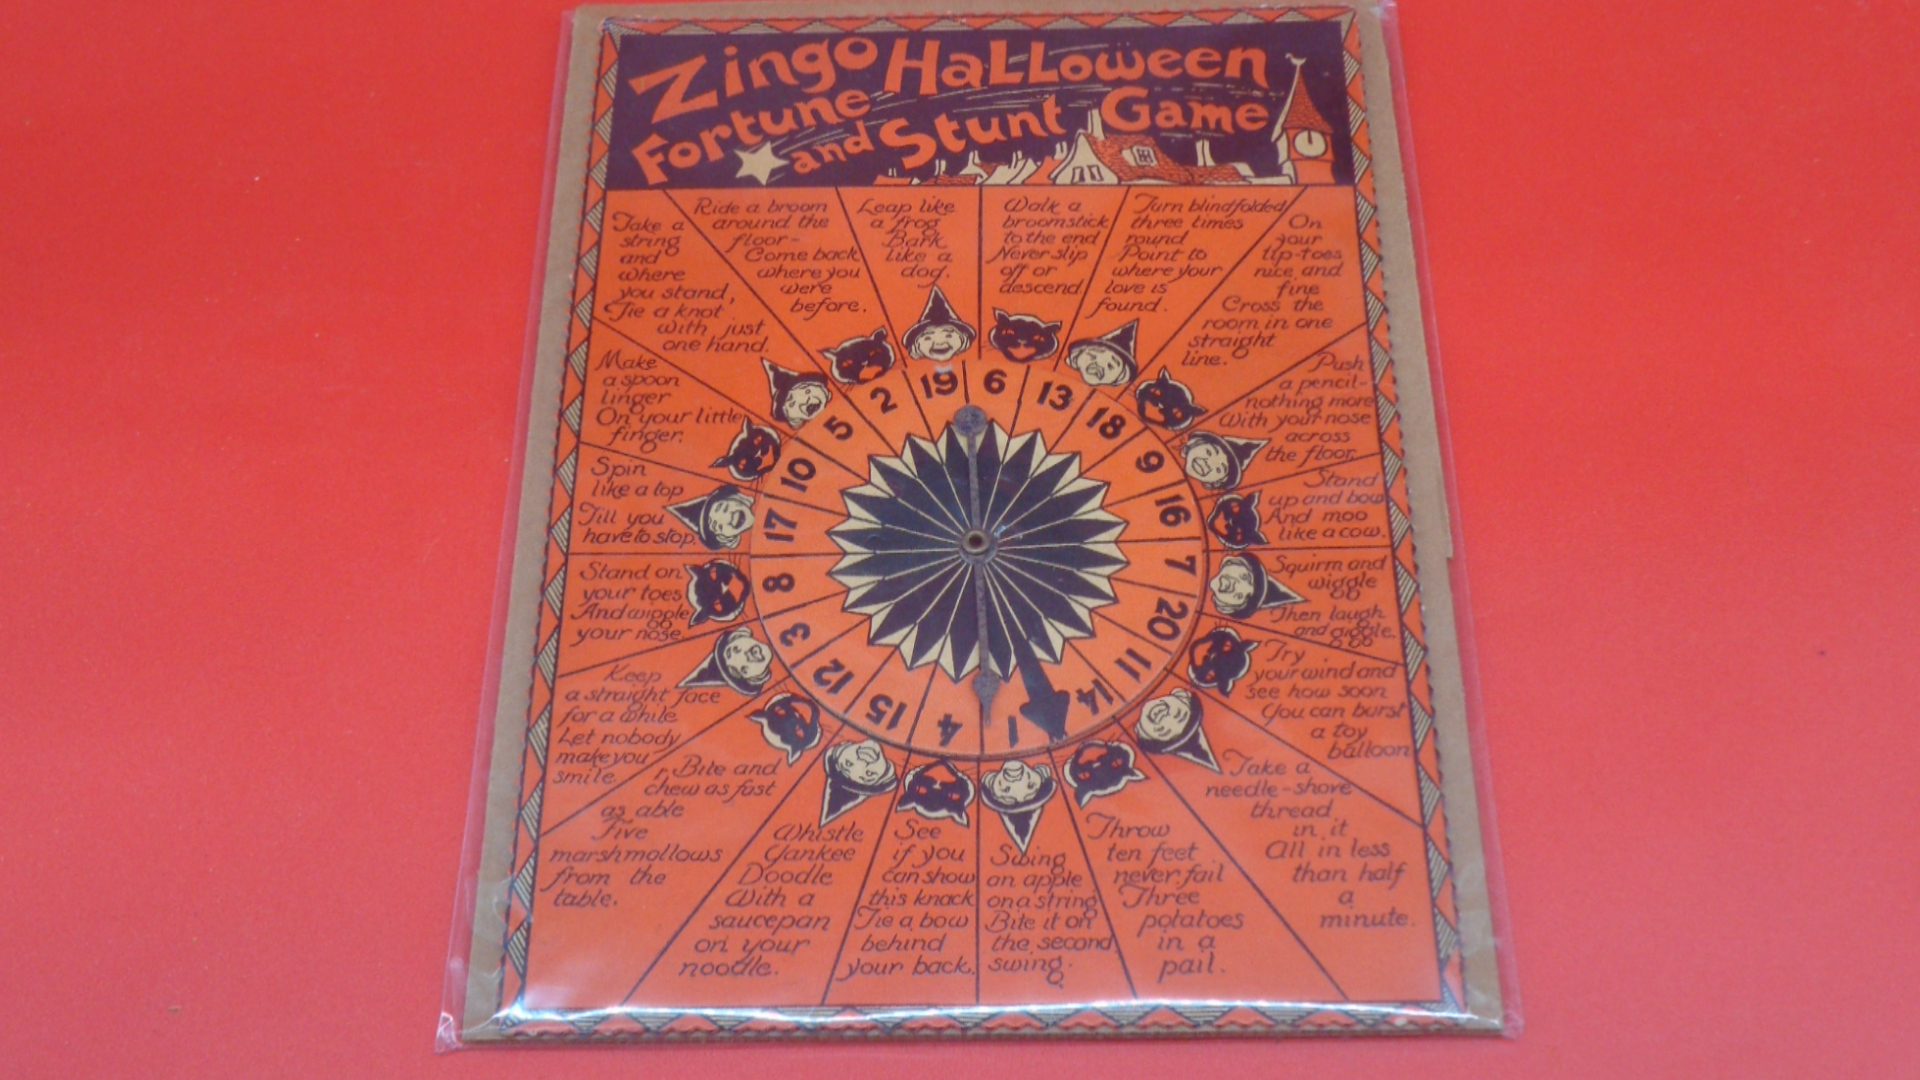 Zingo Halloween Fortune and Stunt game